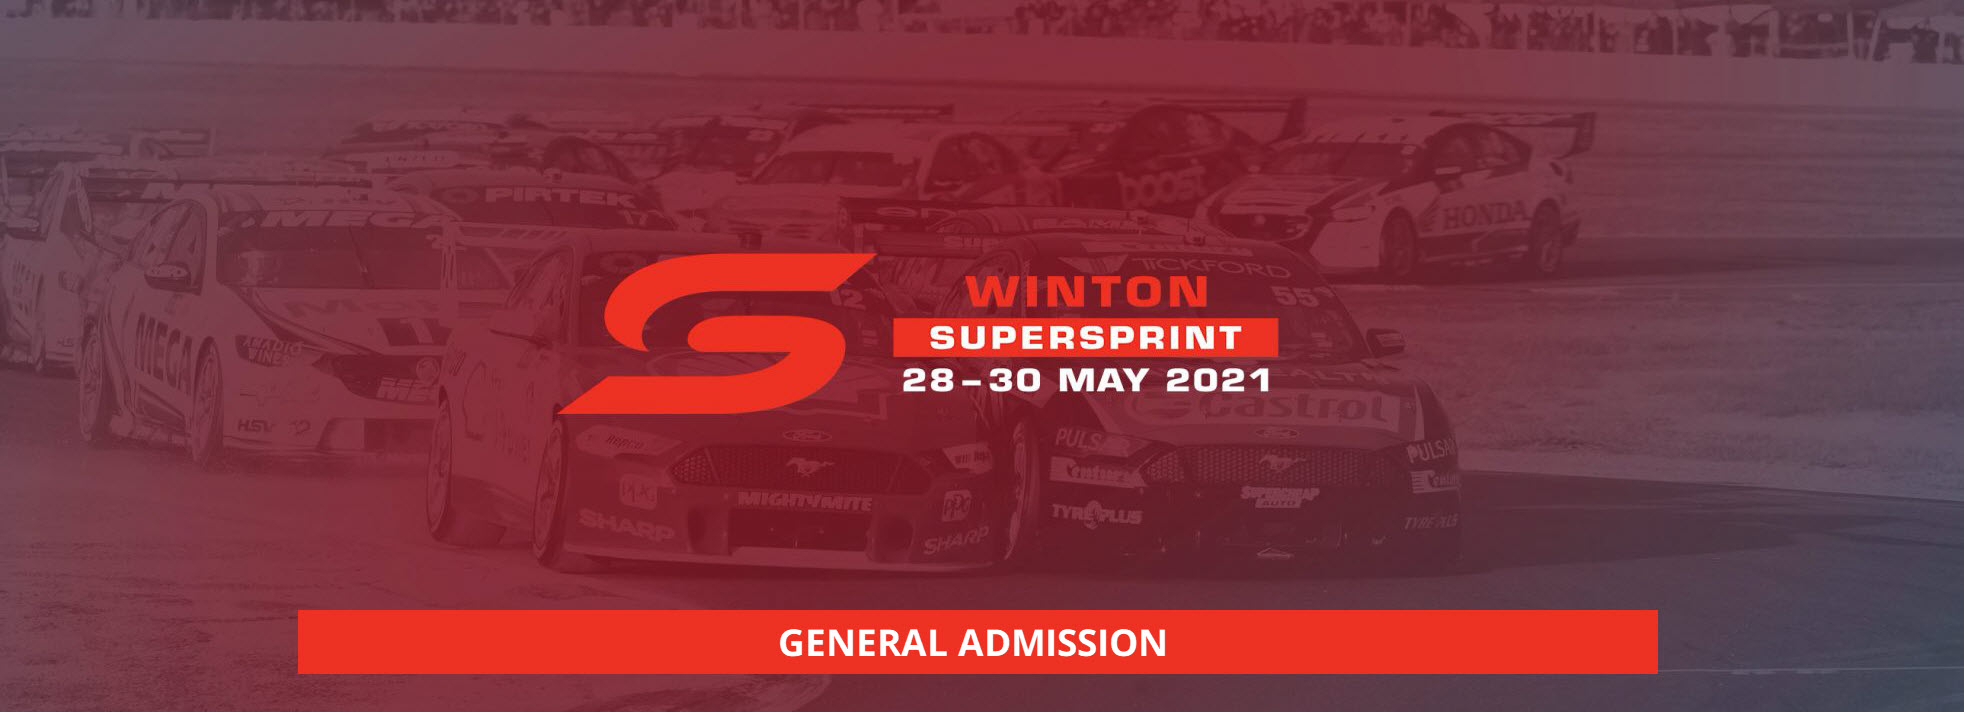 Winton SuperSprint 2021 | General Admission